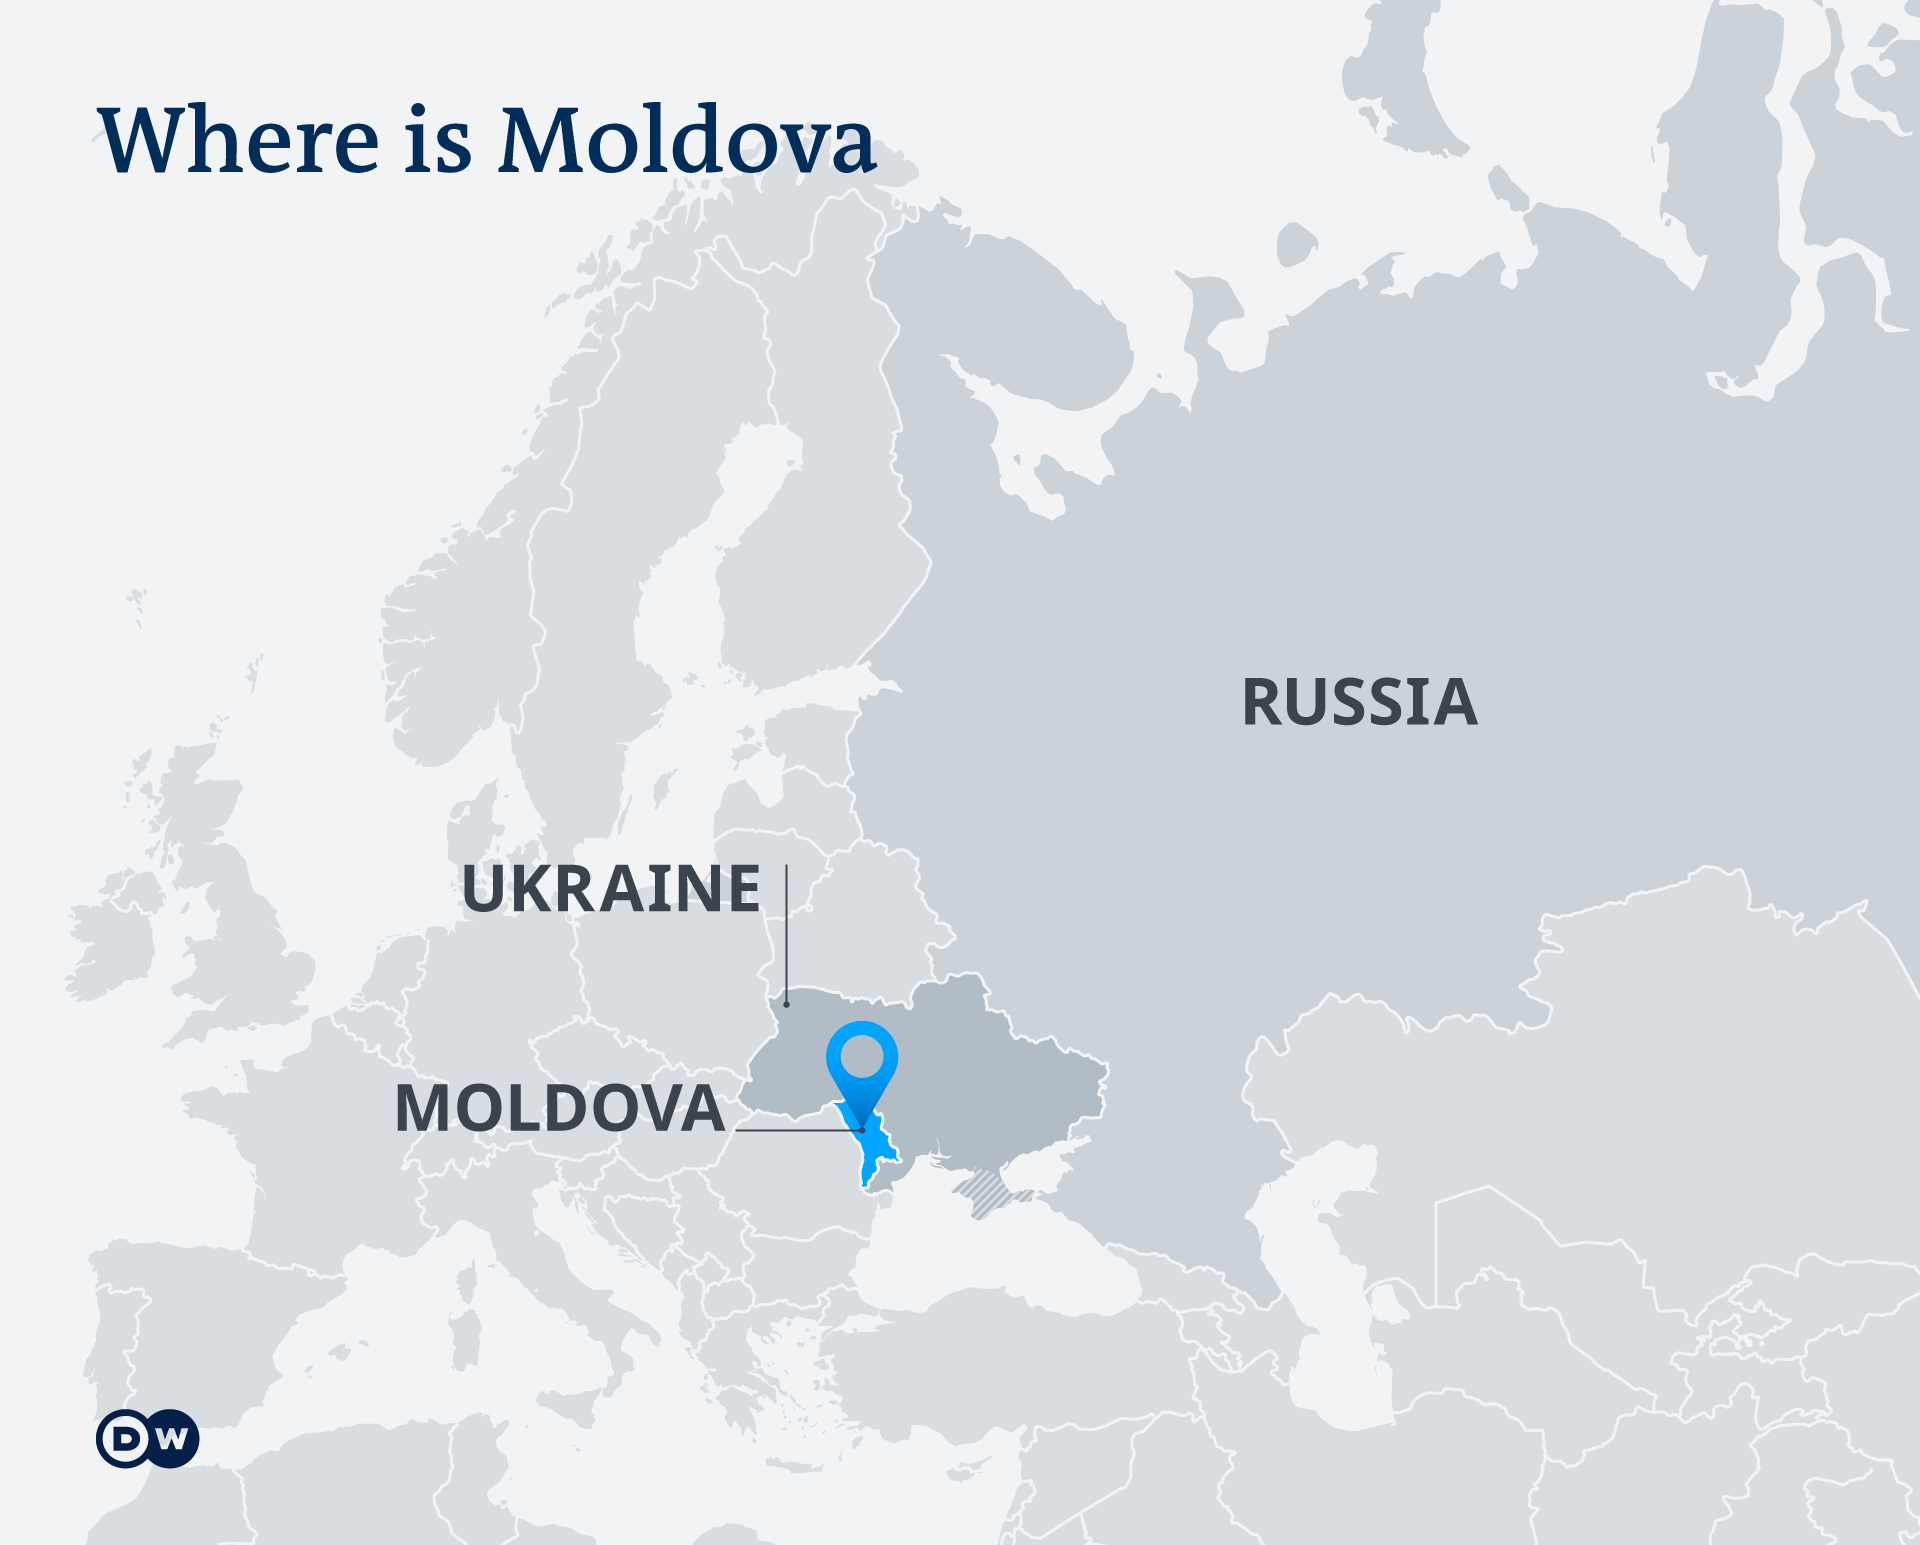 A European map highlights Moldova's location